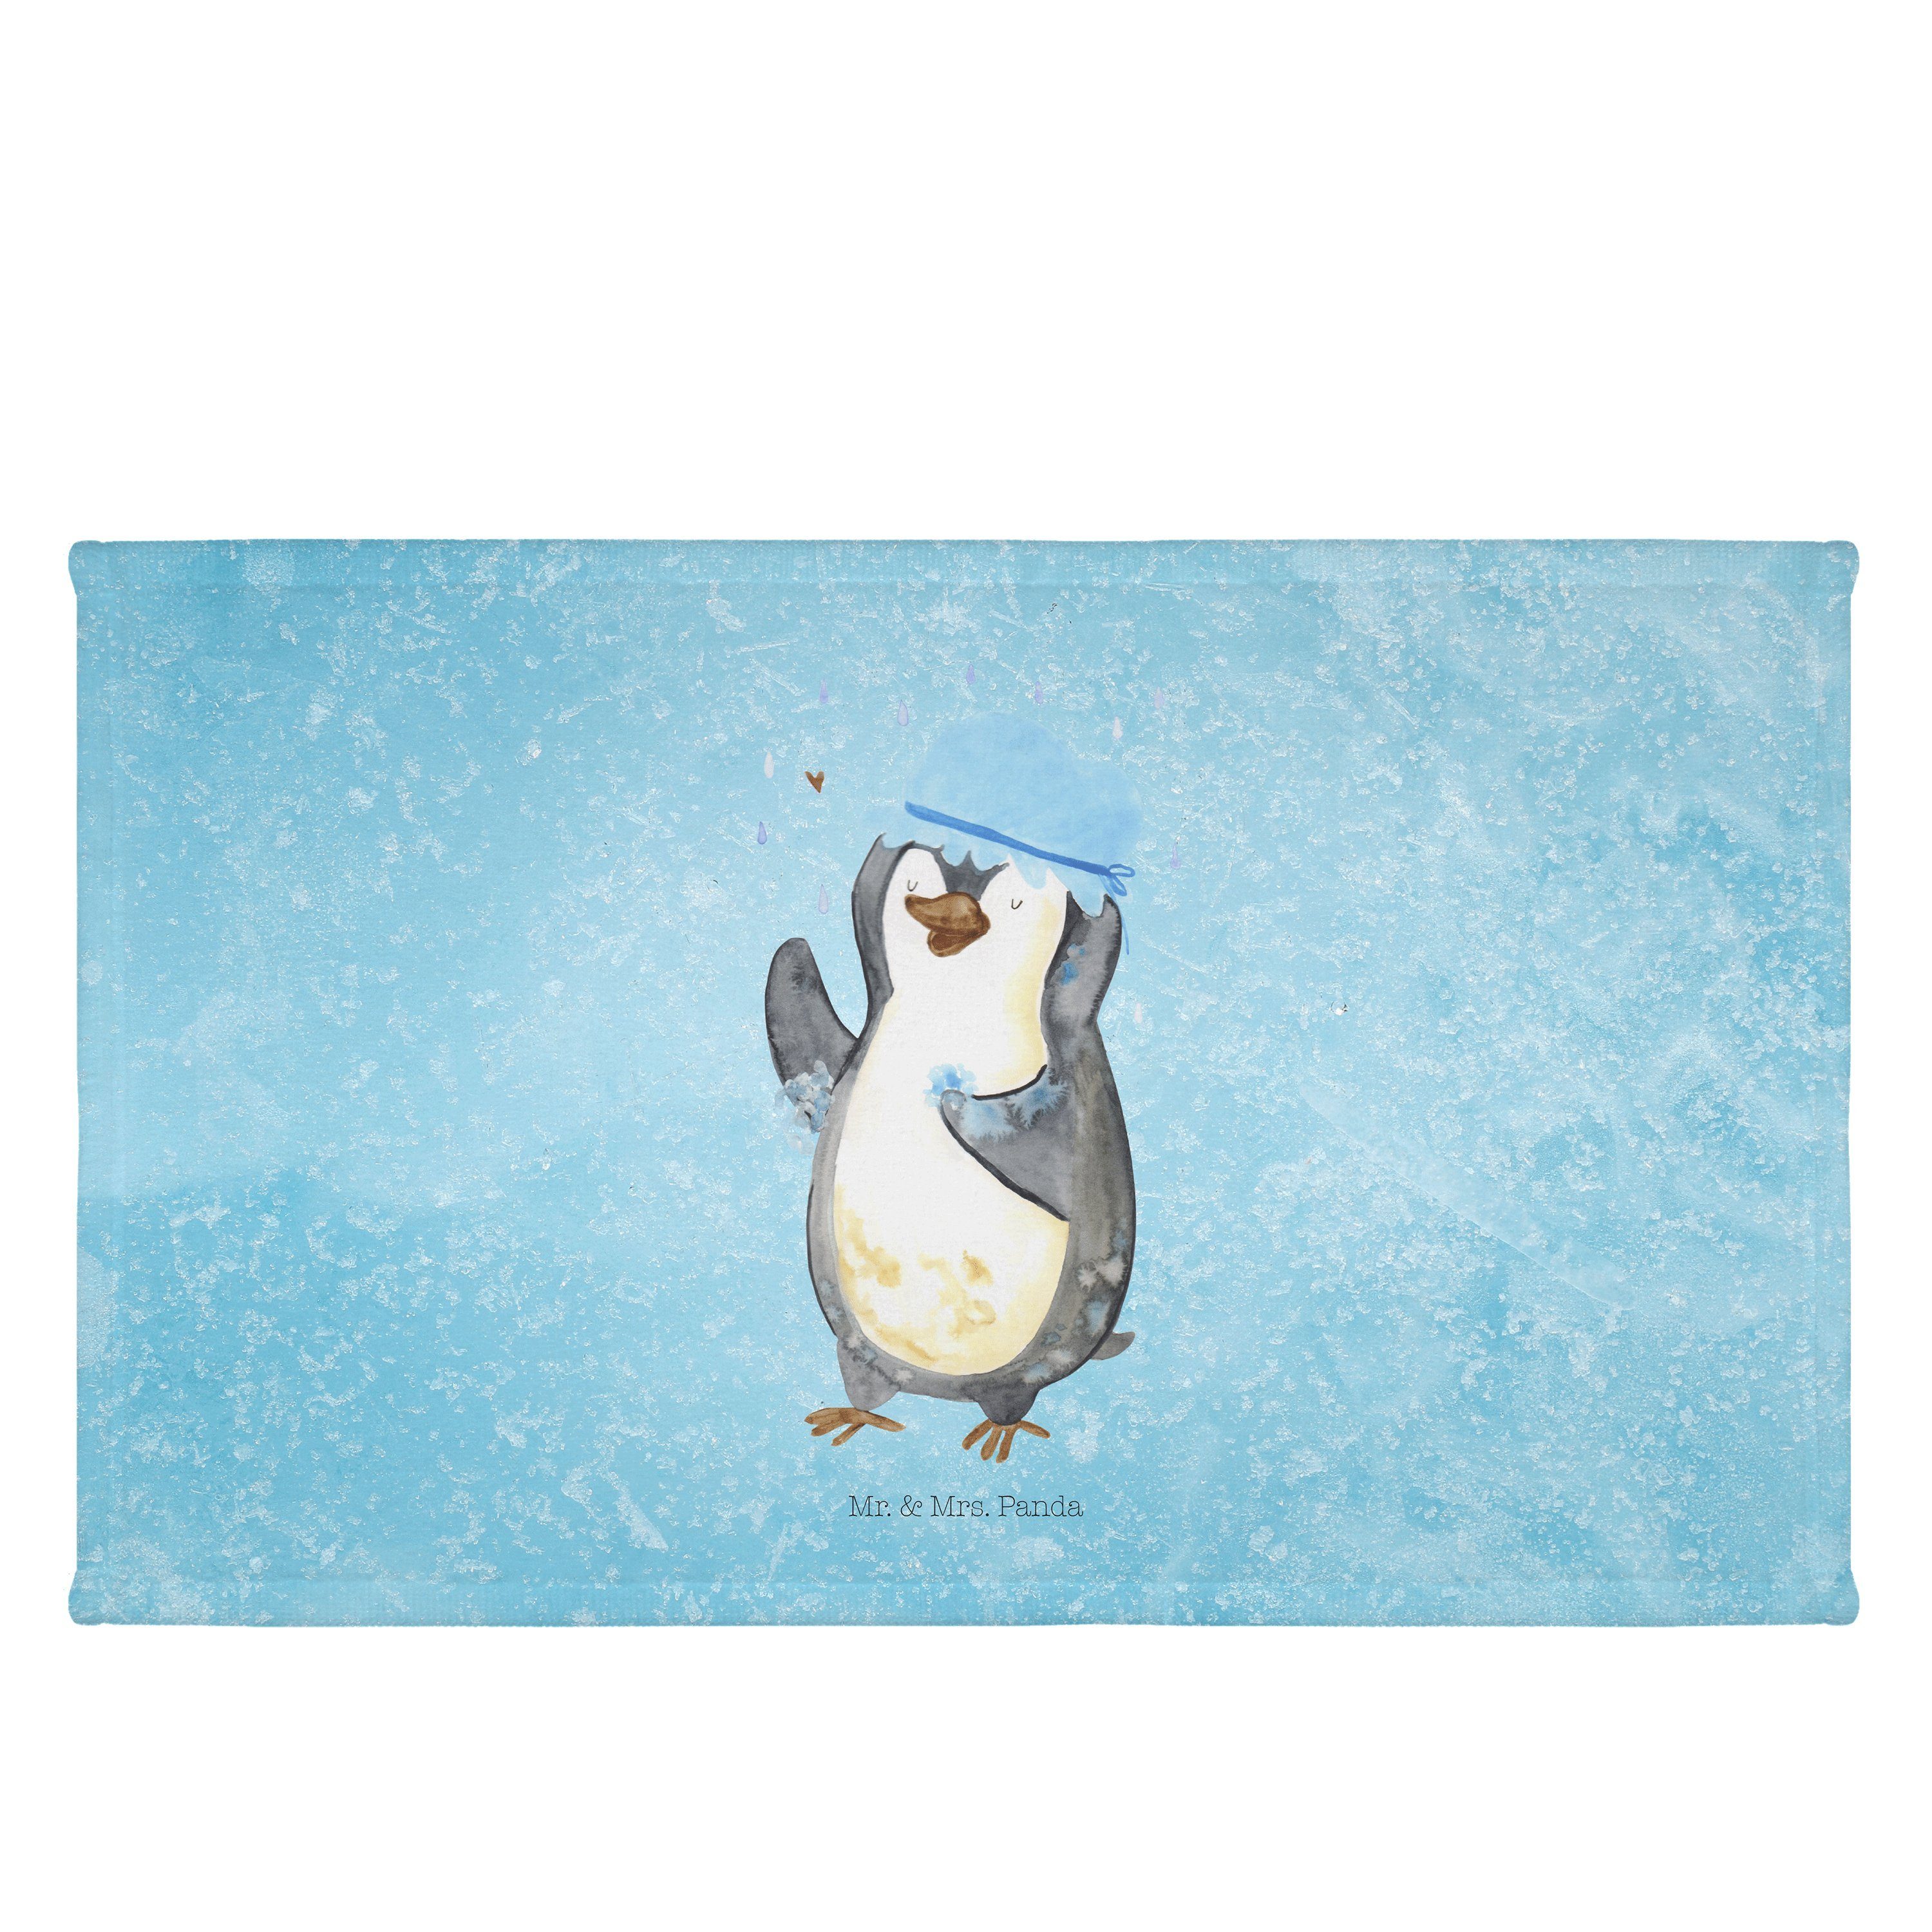 Mr. & Mrs. Panda Handtuch Pinguin duscht - Eisblau - Geschenk, Kinder Handtuch, Sport Handtuch, (1-St)